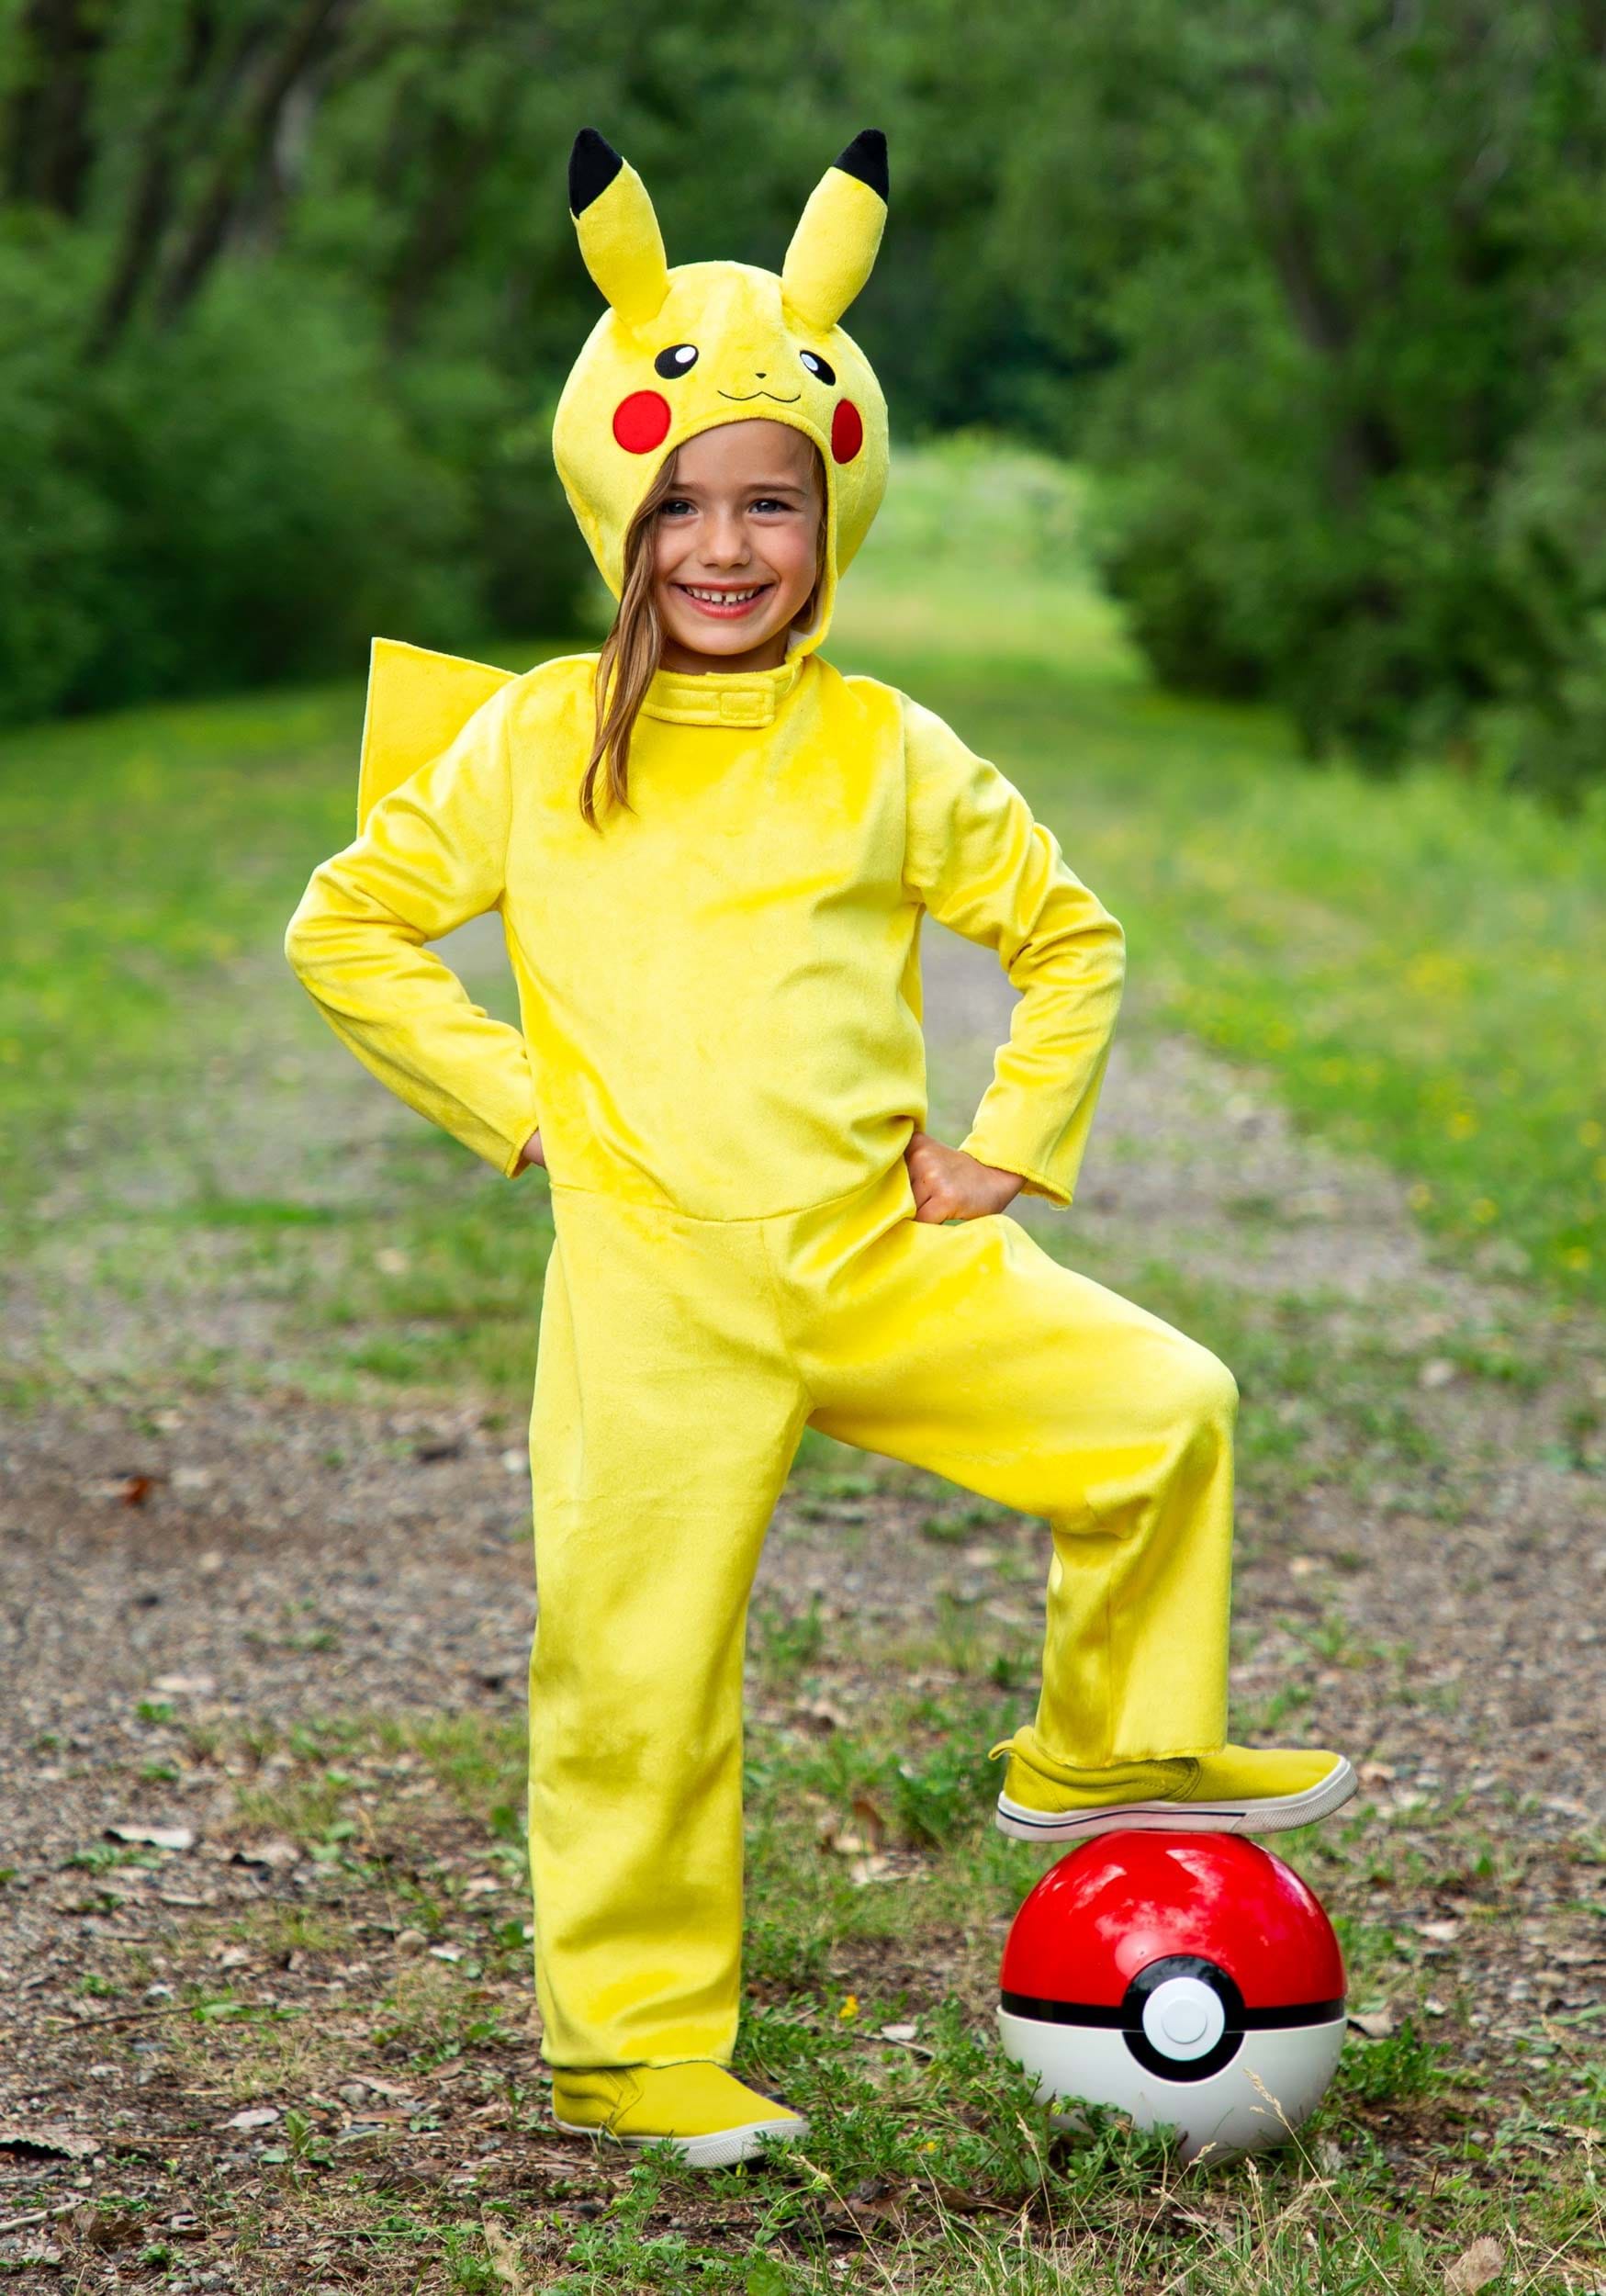 The Pokémon Toddler Pikachu Classic Costume